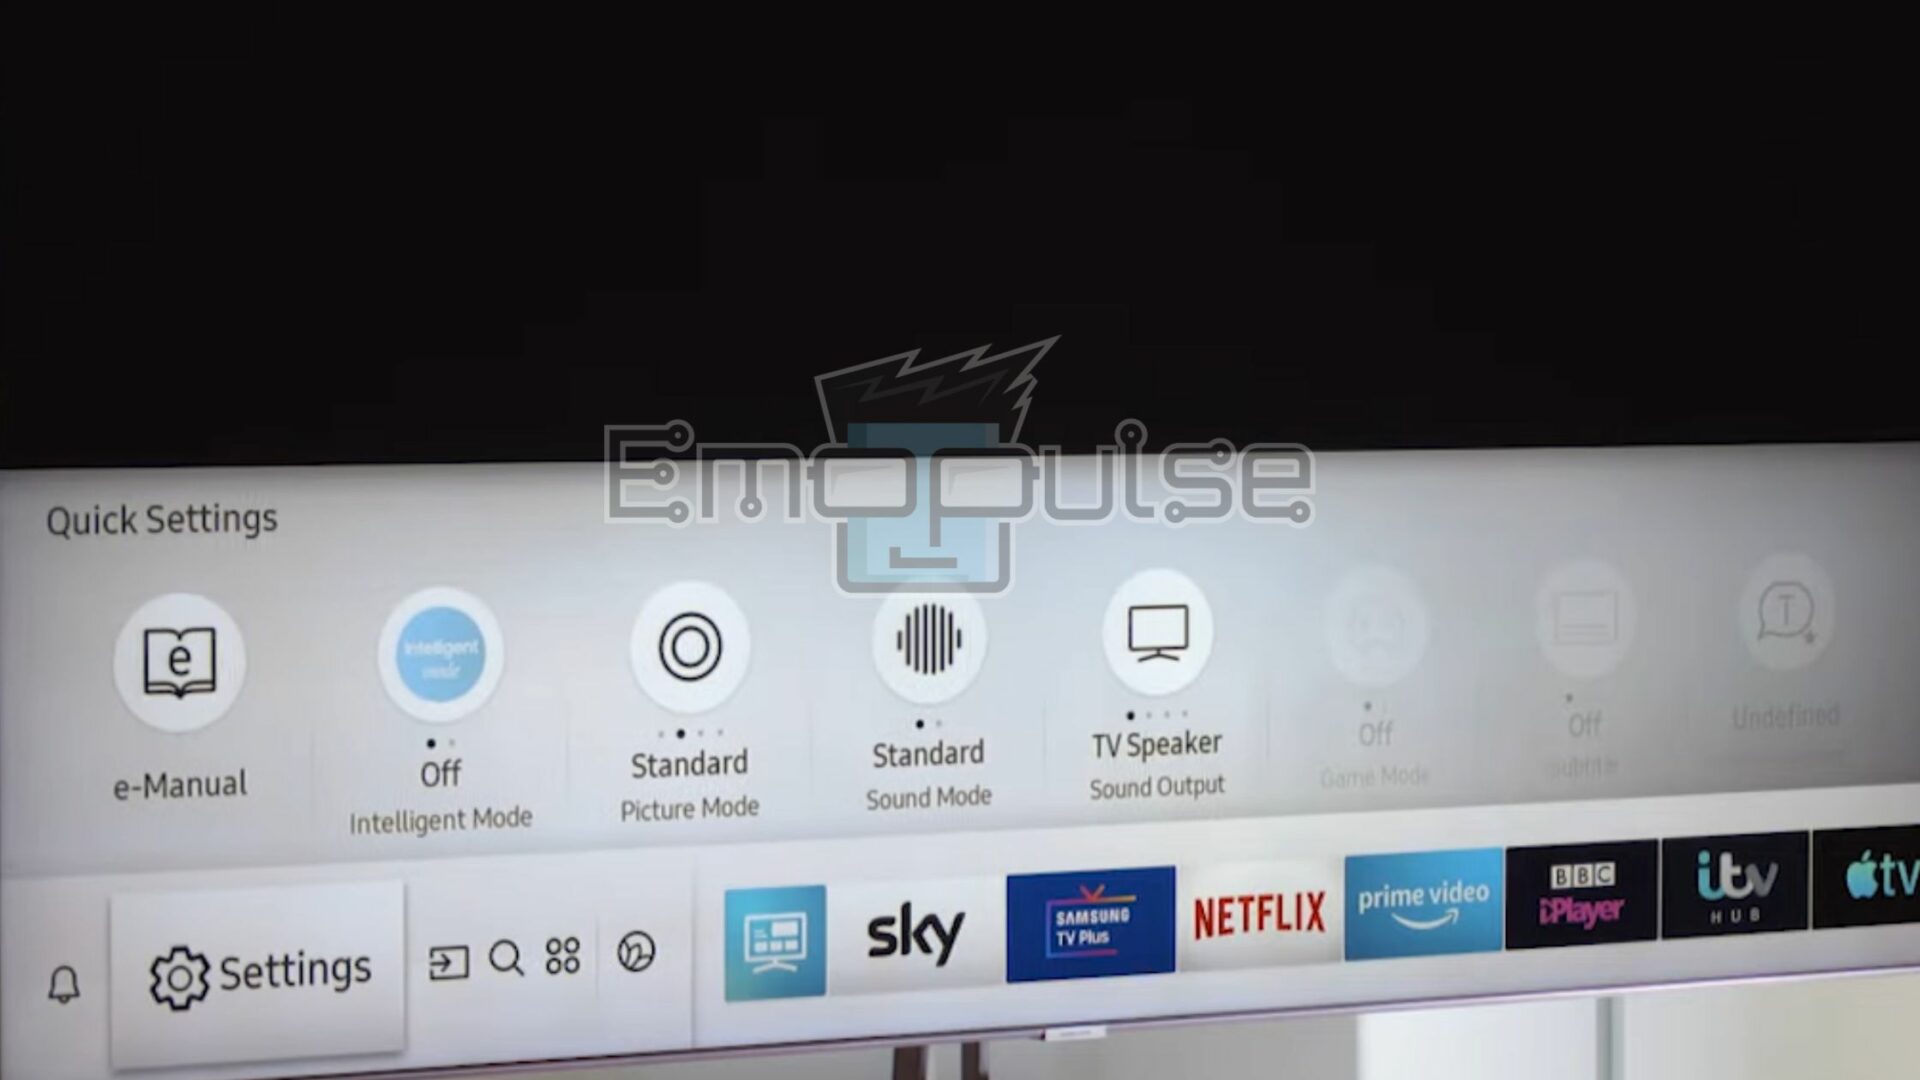 Settings on a Samsung Smart TV